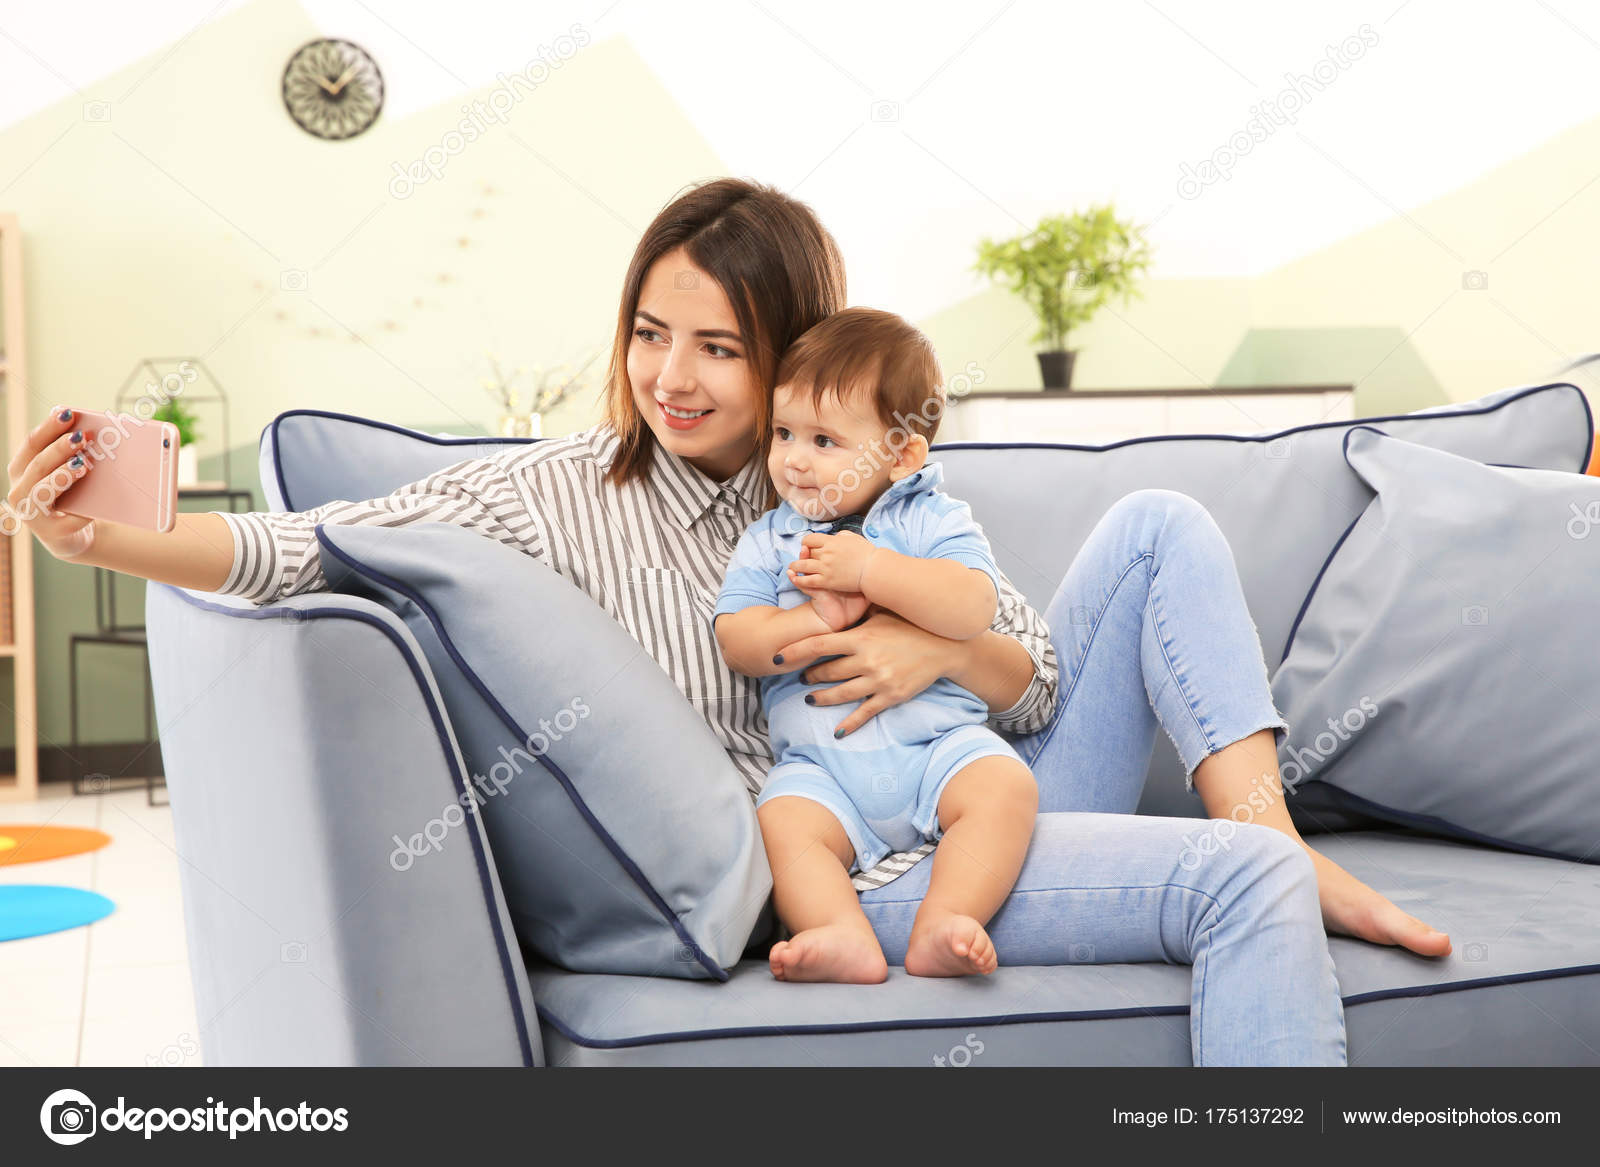 sofa for baby boy